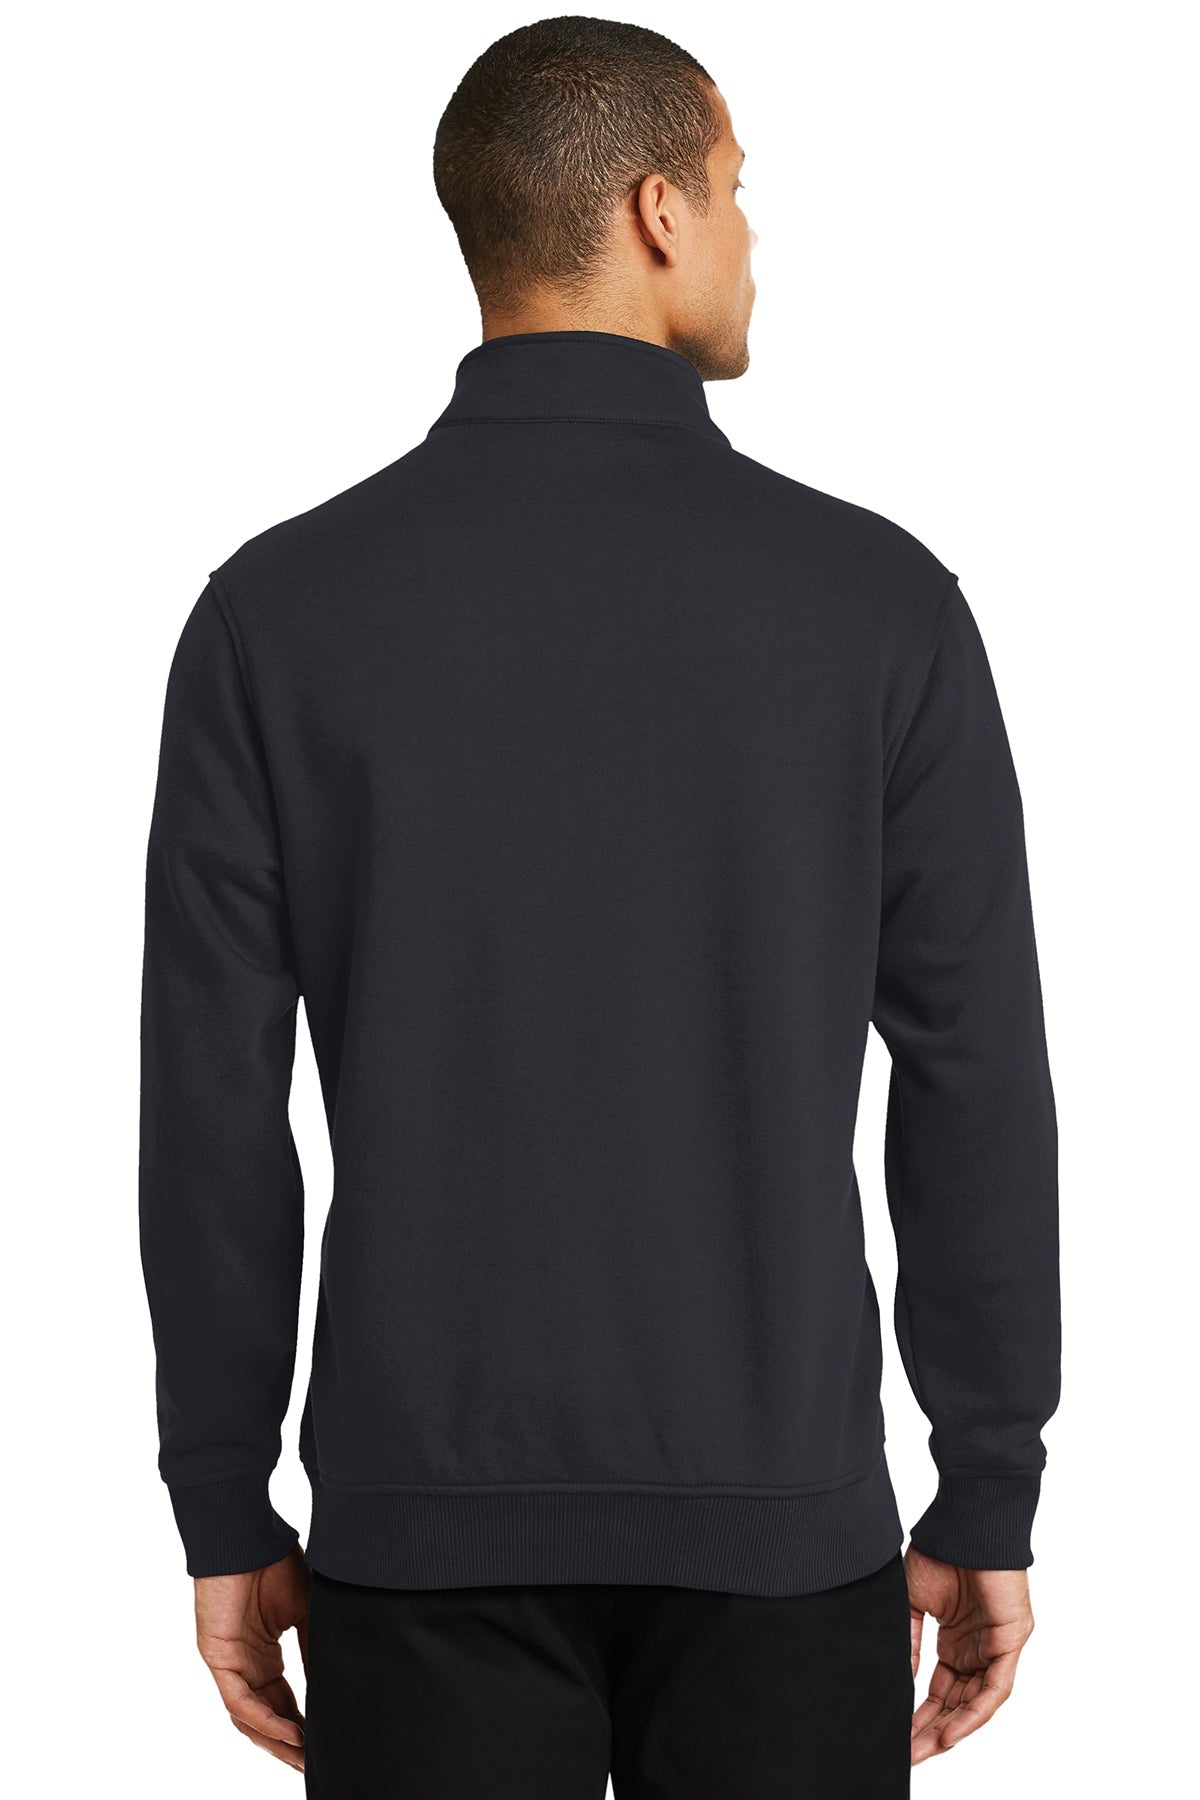 cornerstone_cs626 _dark navy_company_logo_sweatshirts